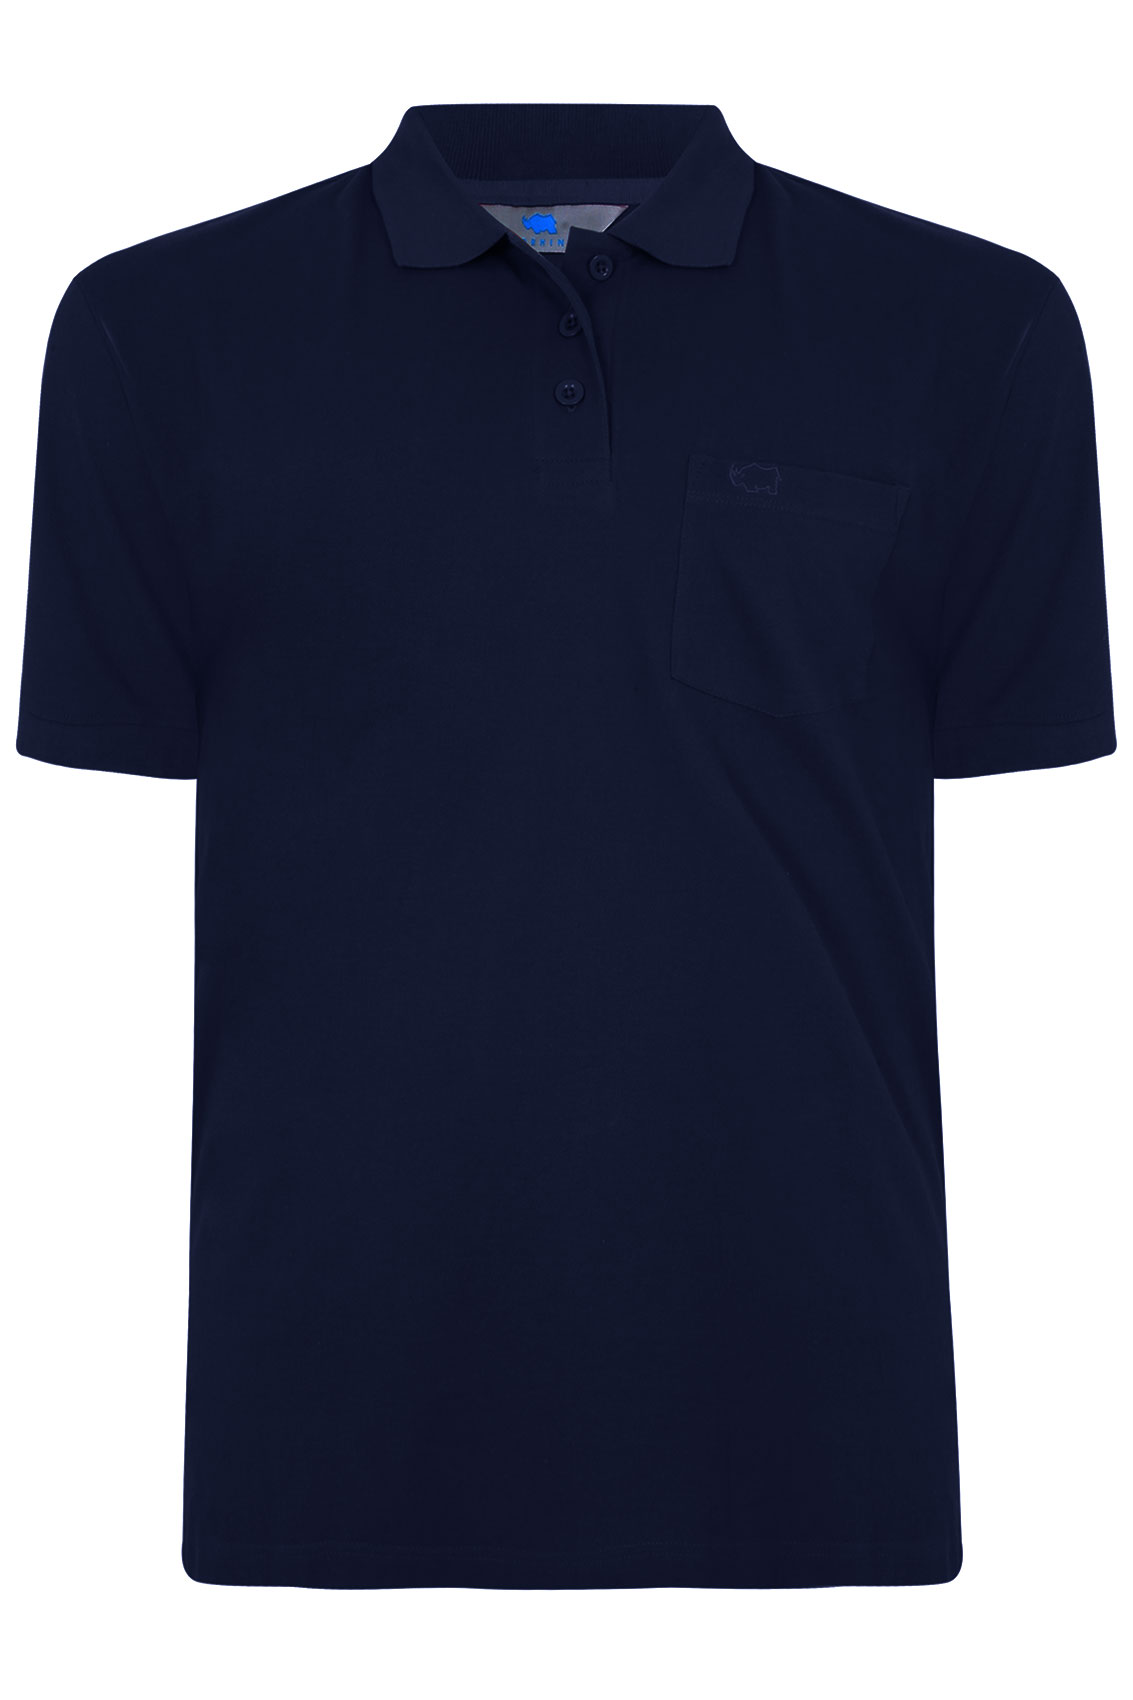 Download BadRhino Navy Plain Polo Shirt Extra large sizes M,L,XL ...